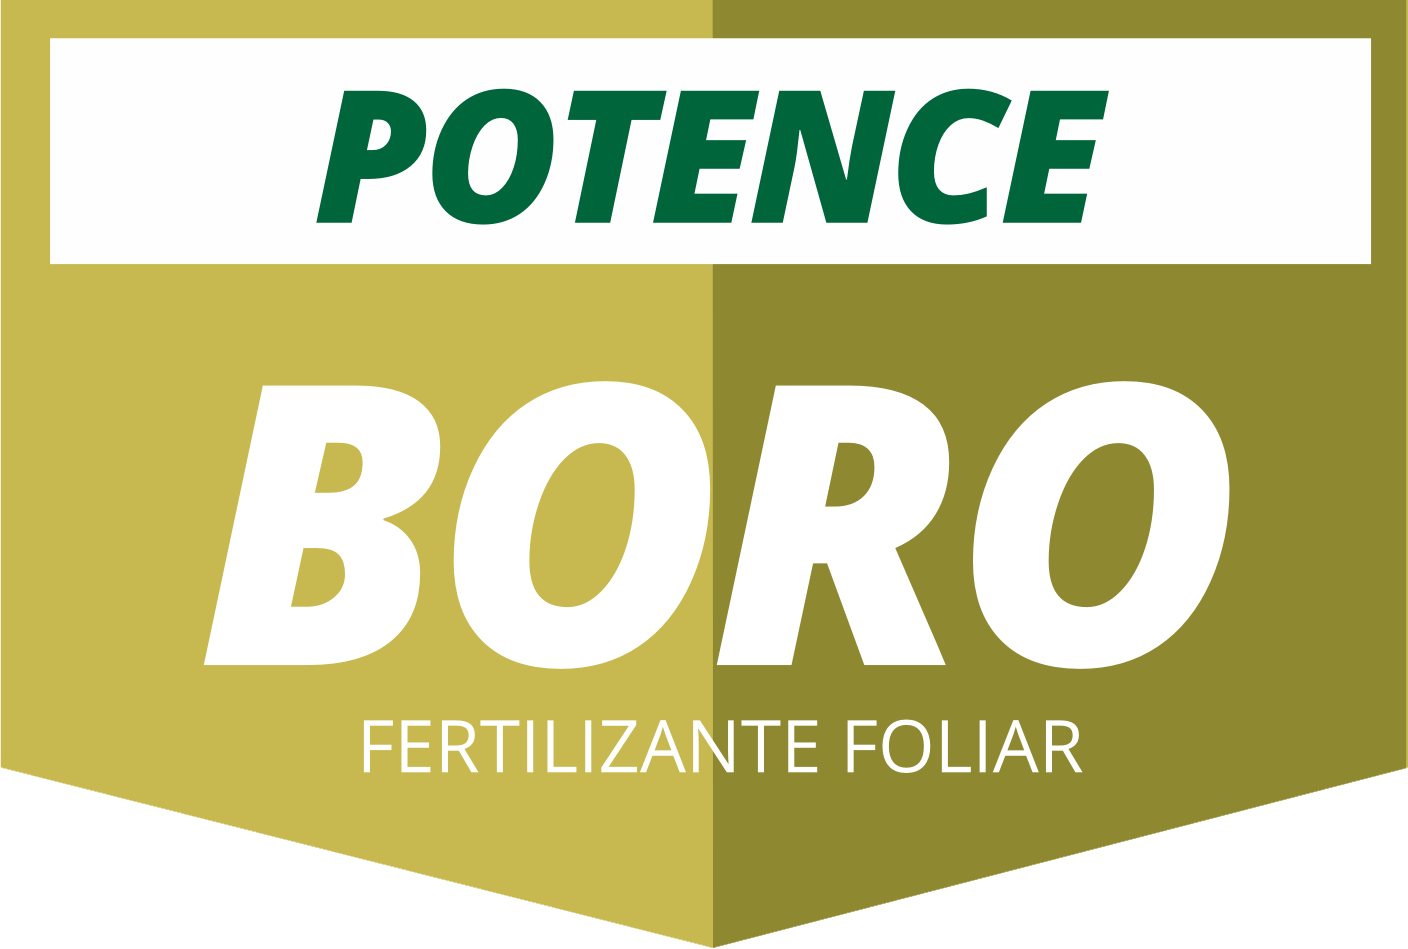 Potence Boro